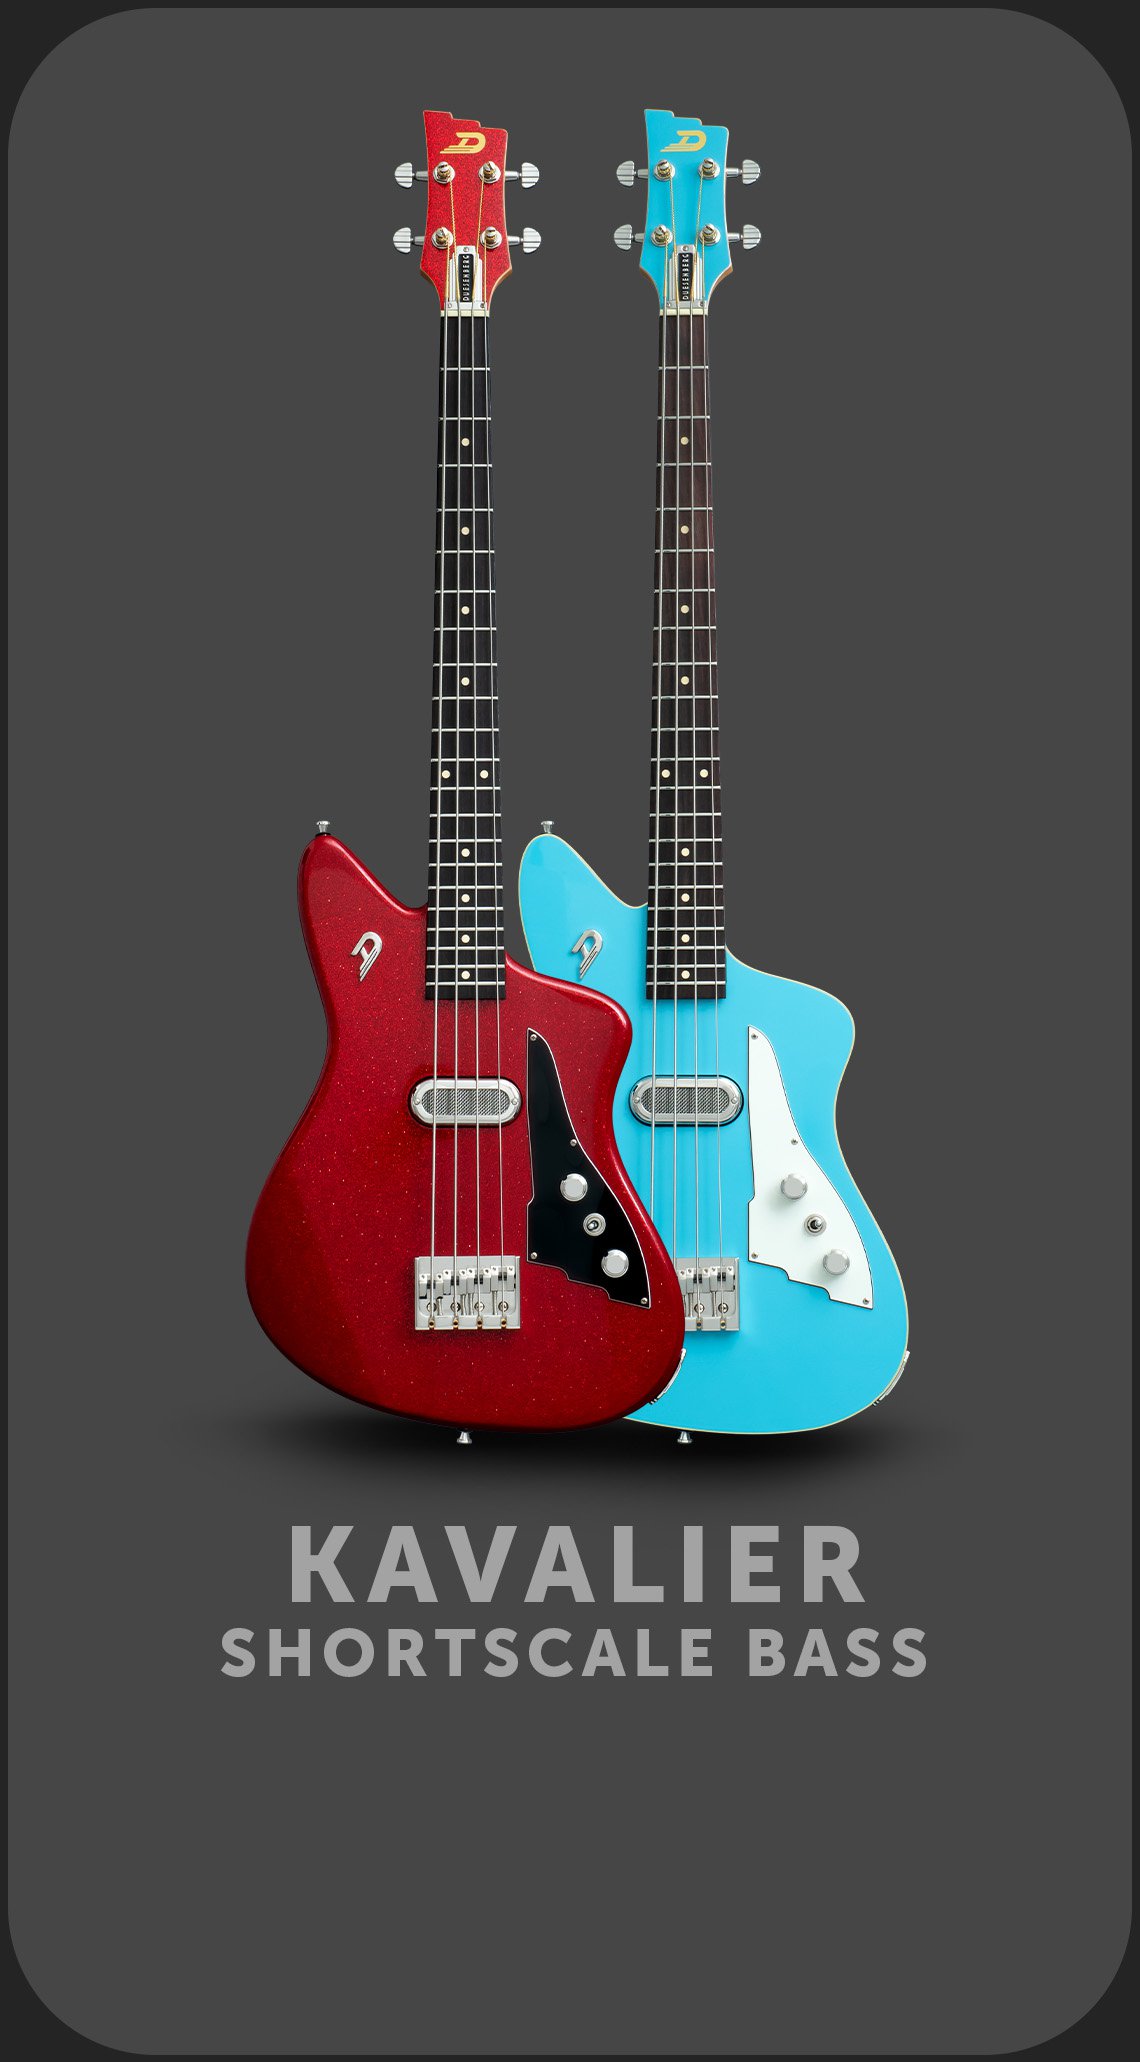 Overview Card for the Duesenberg Kavalier Bass